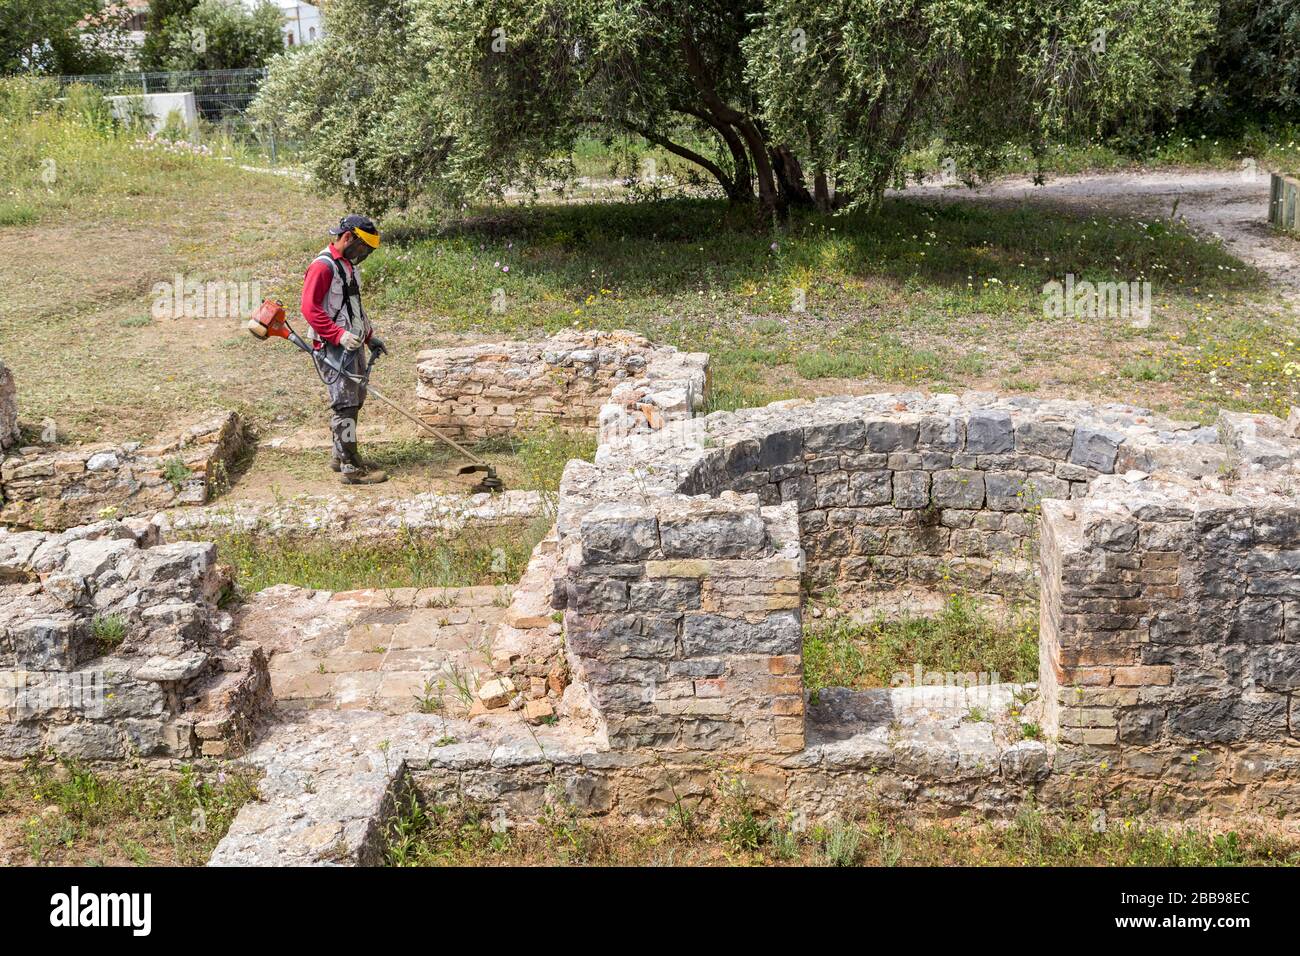 Wokman strimming weeds at the Roman ruins, Milreu, Algarve, Portugal Stock Photo